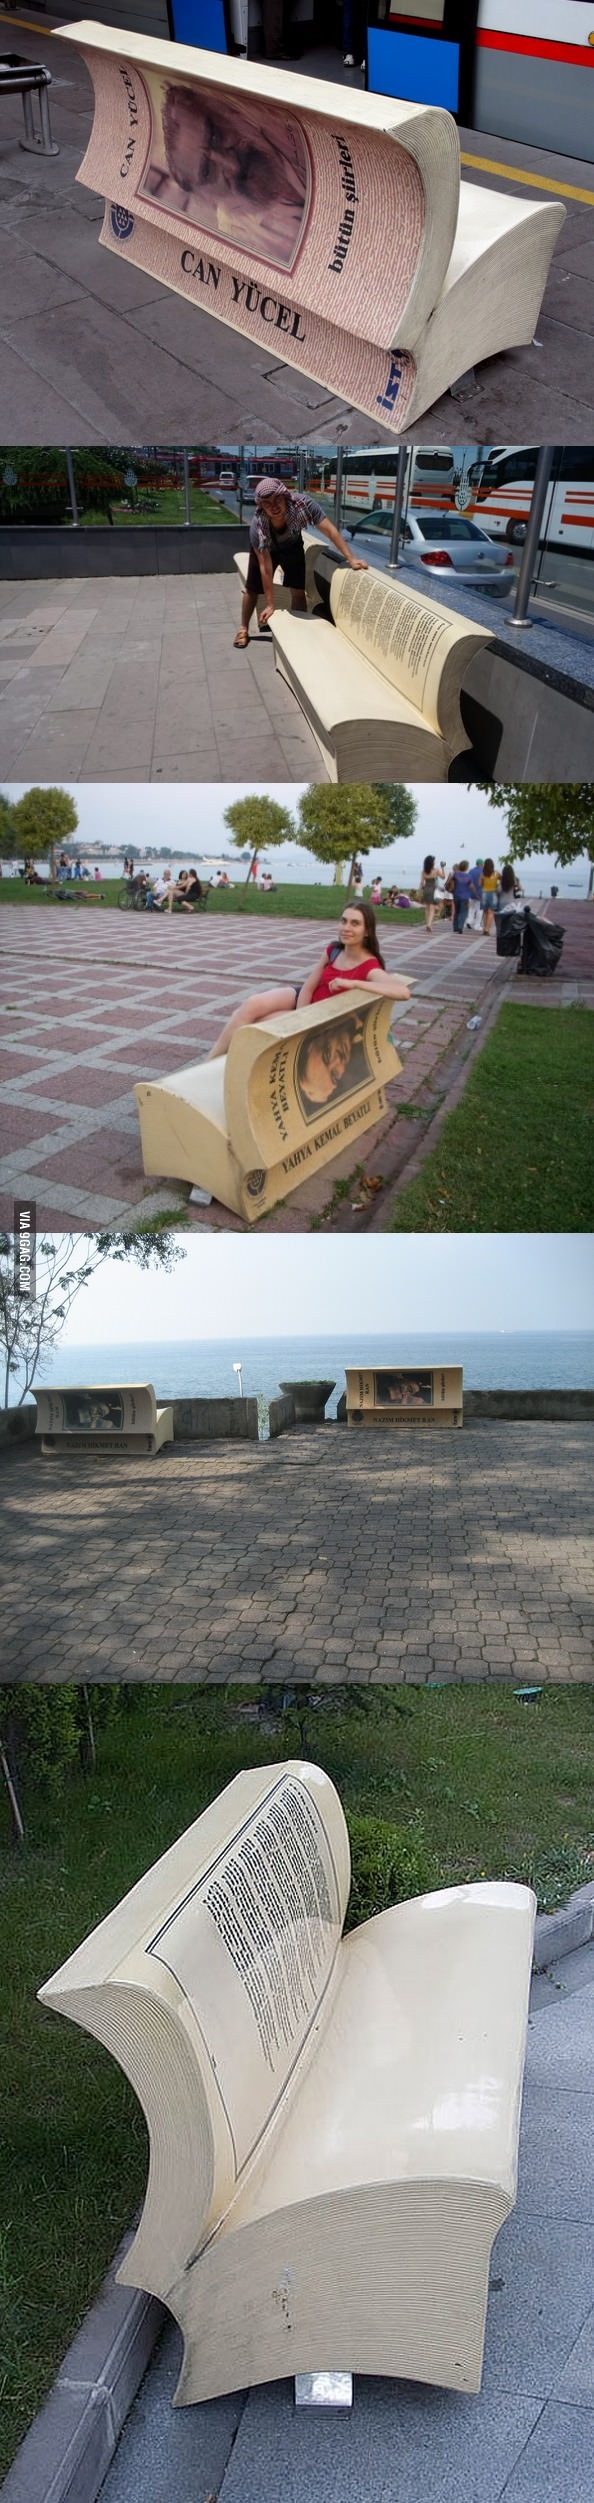 Public benches in Turkey - meme